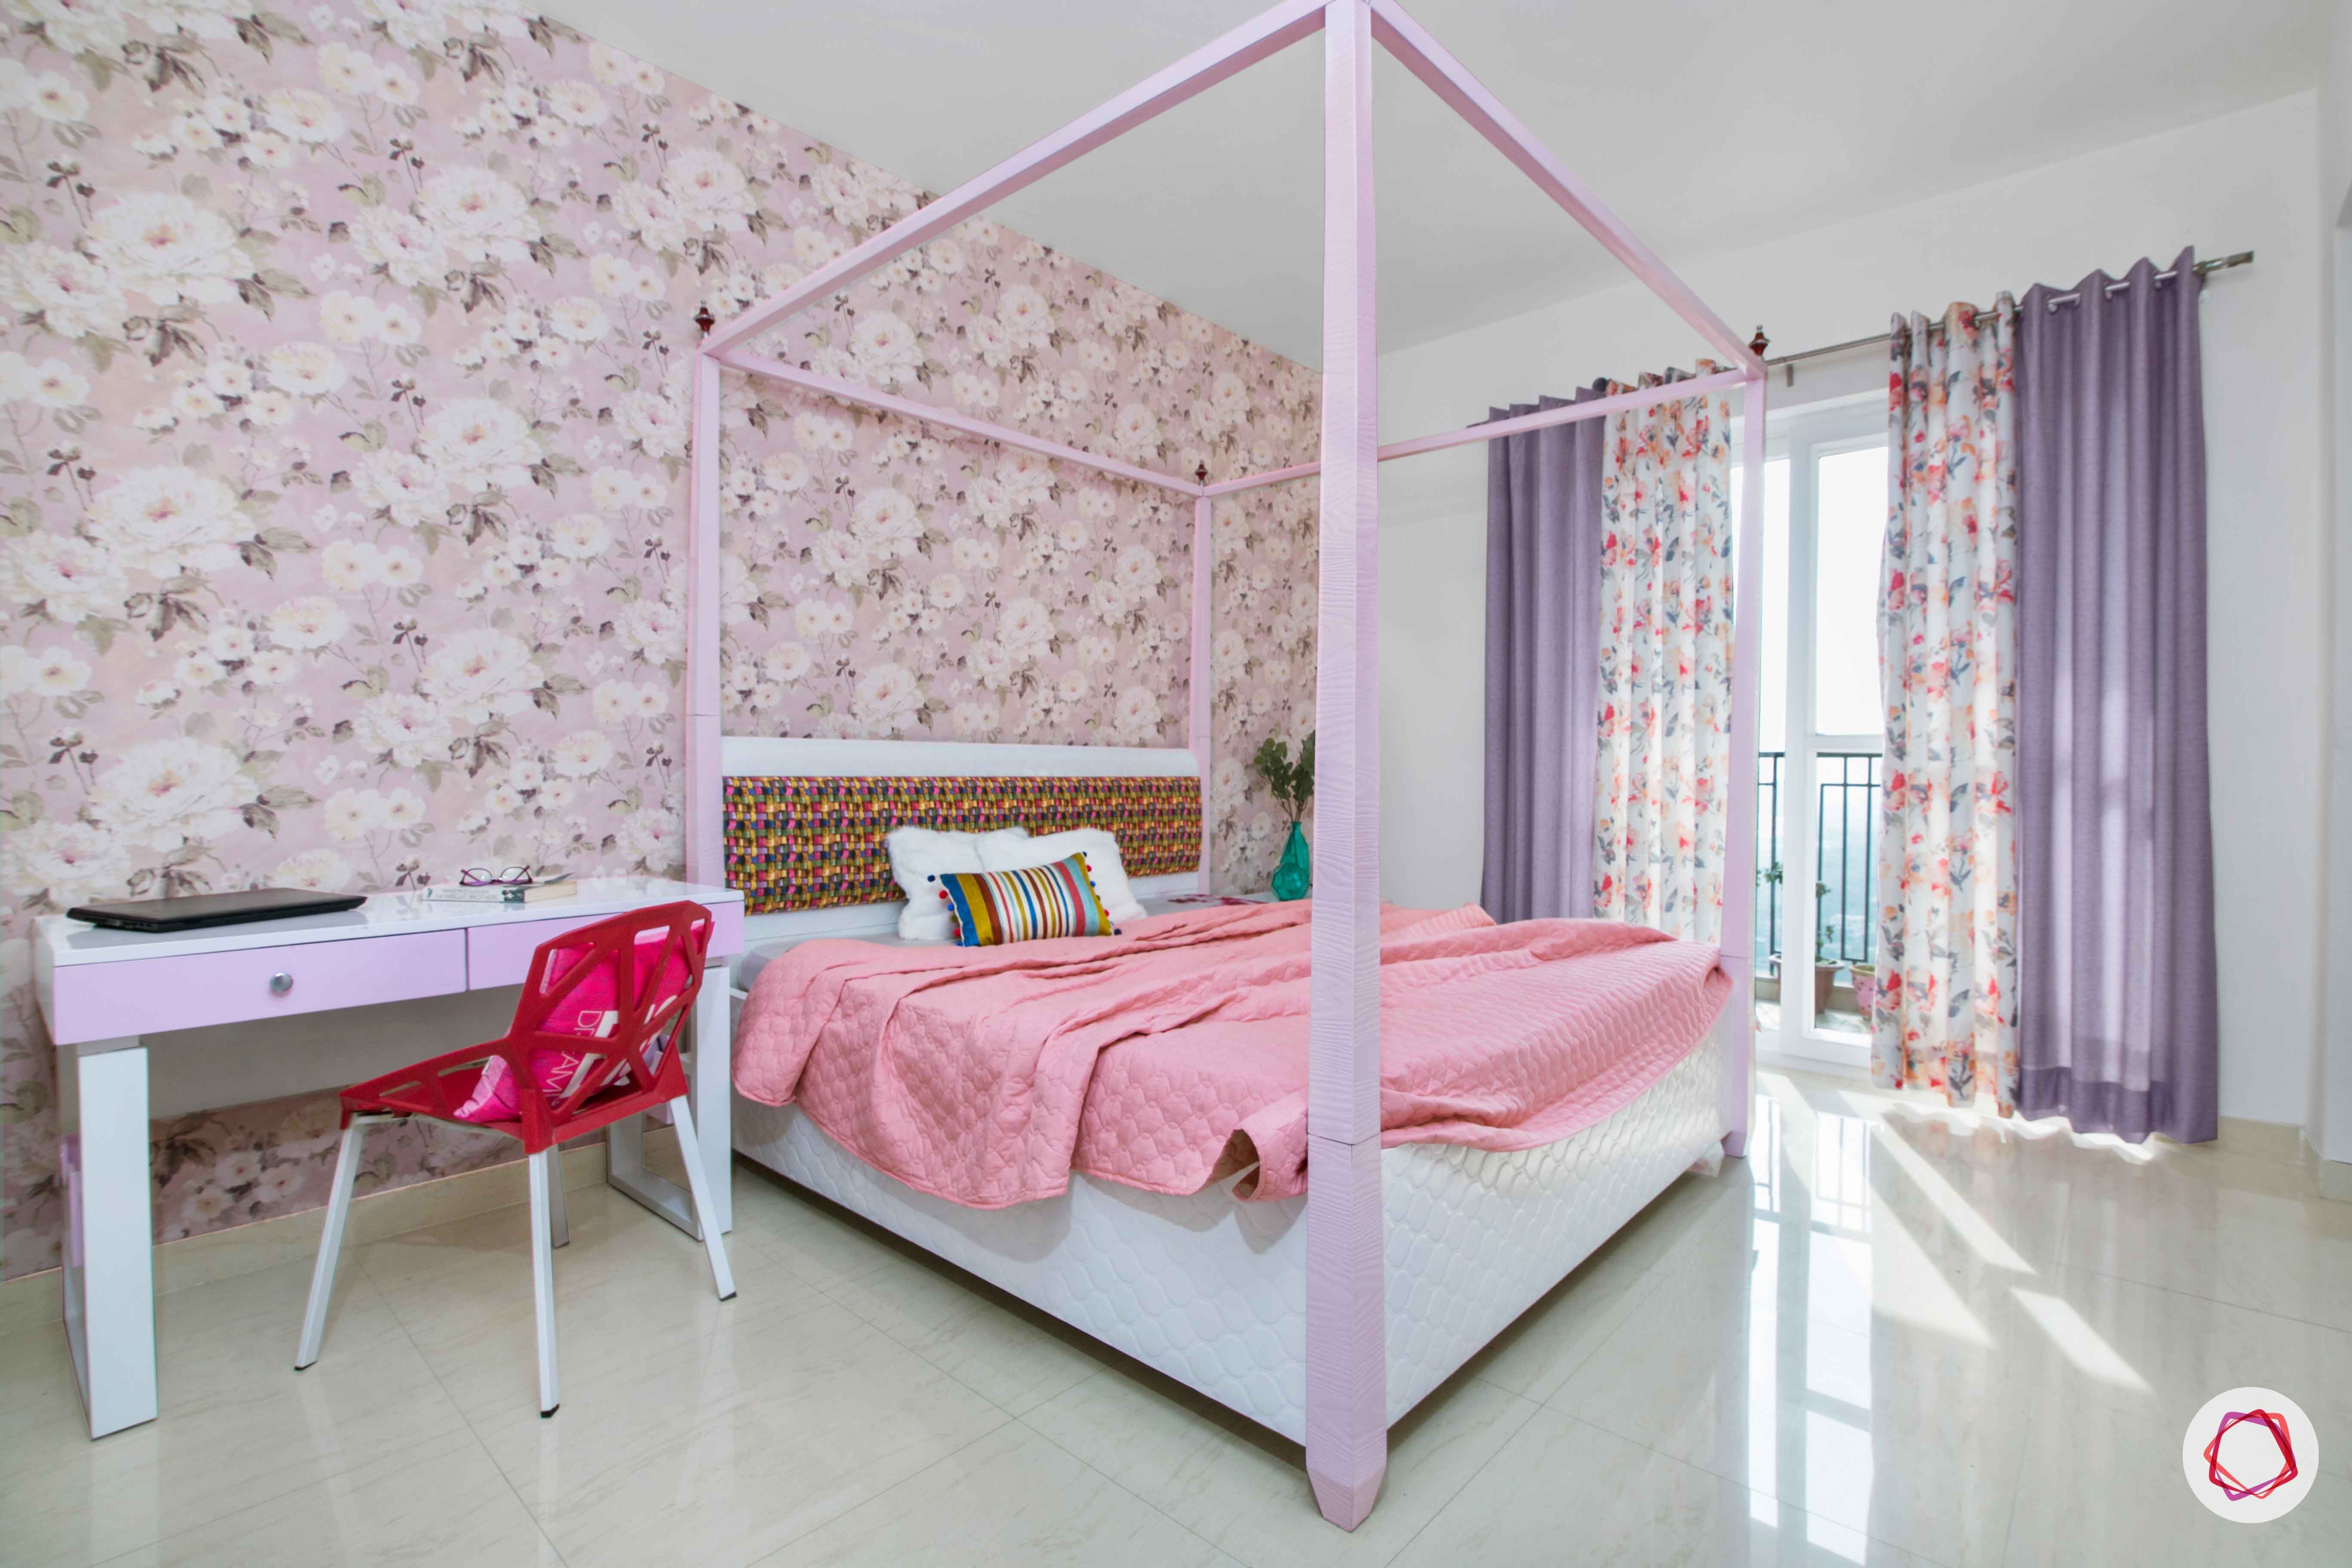 3 bedroom flat design-girls bedroom ideas-four poster bed-wallpaper for girls room-pink girls room